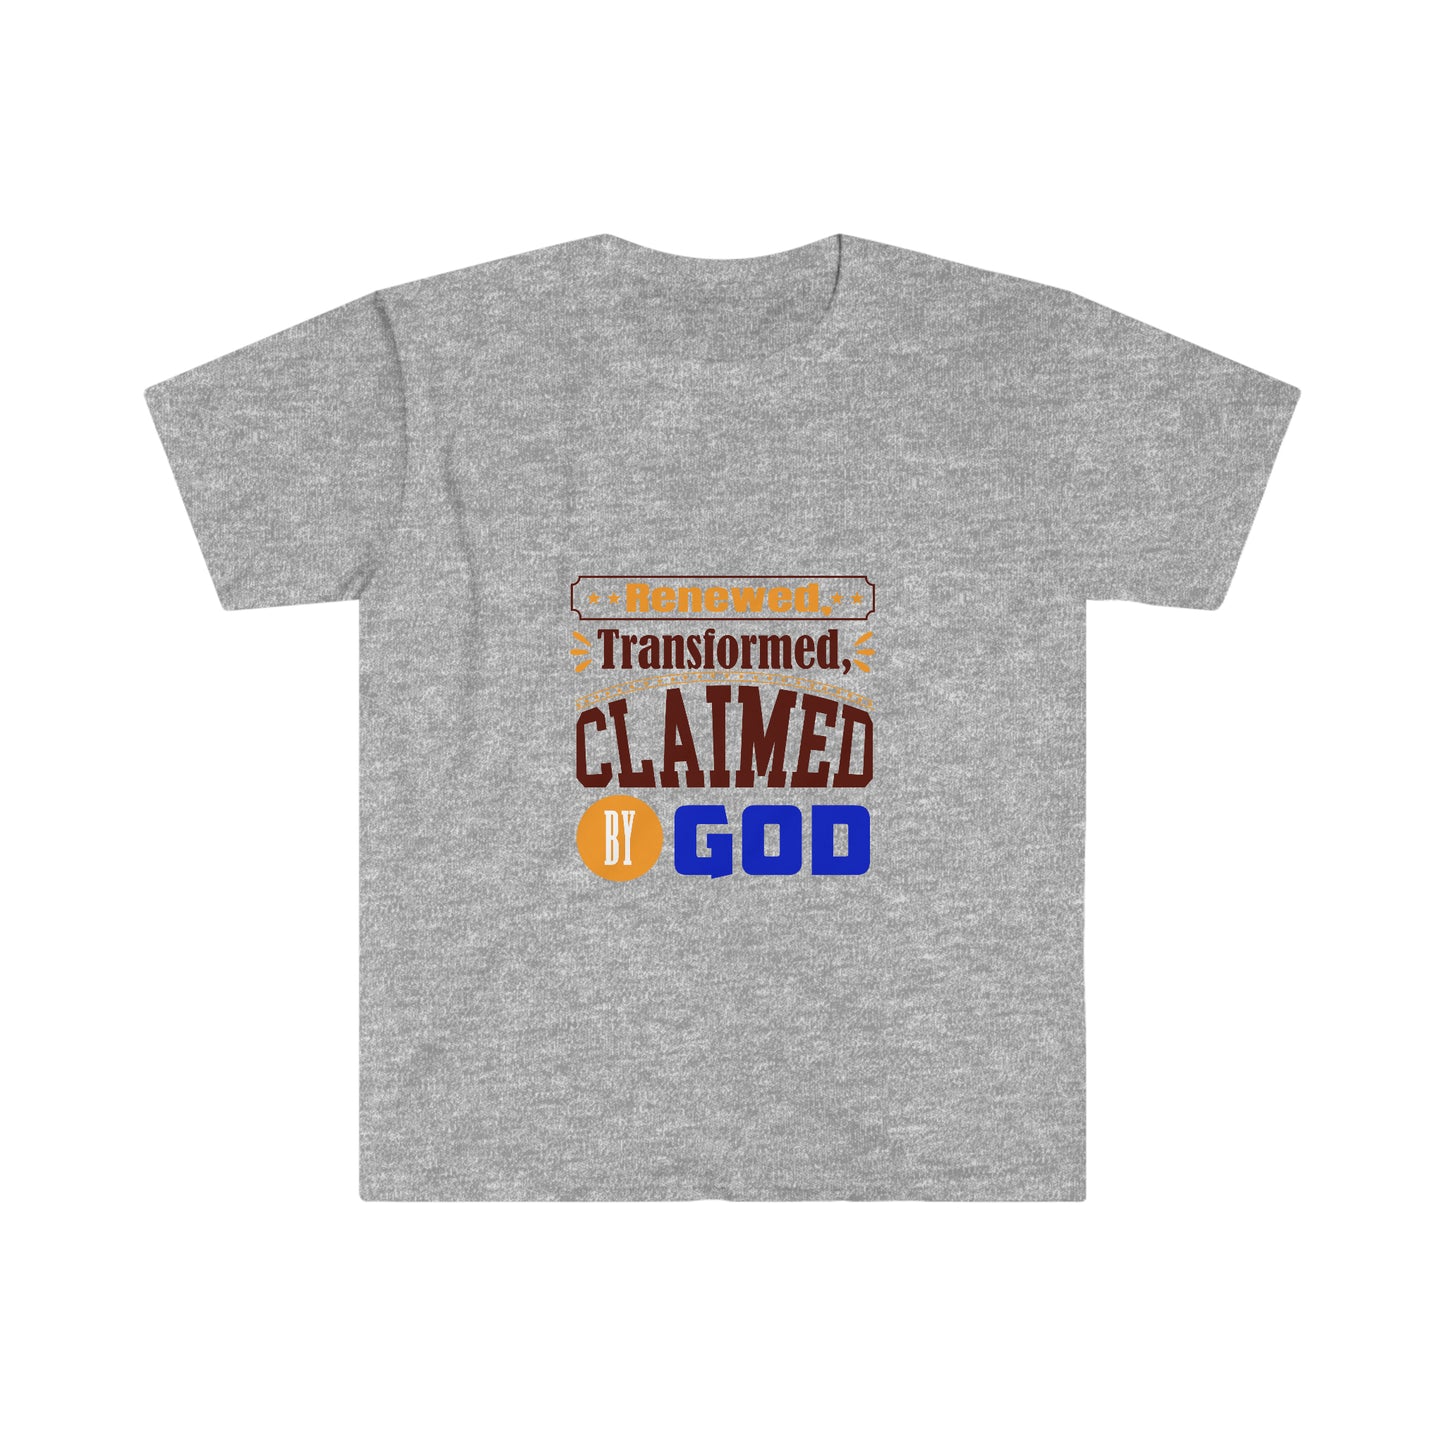 Renewed, Transformed, Claimed By God Unisex T-shirt